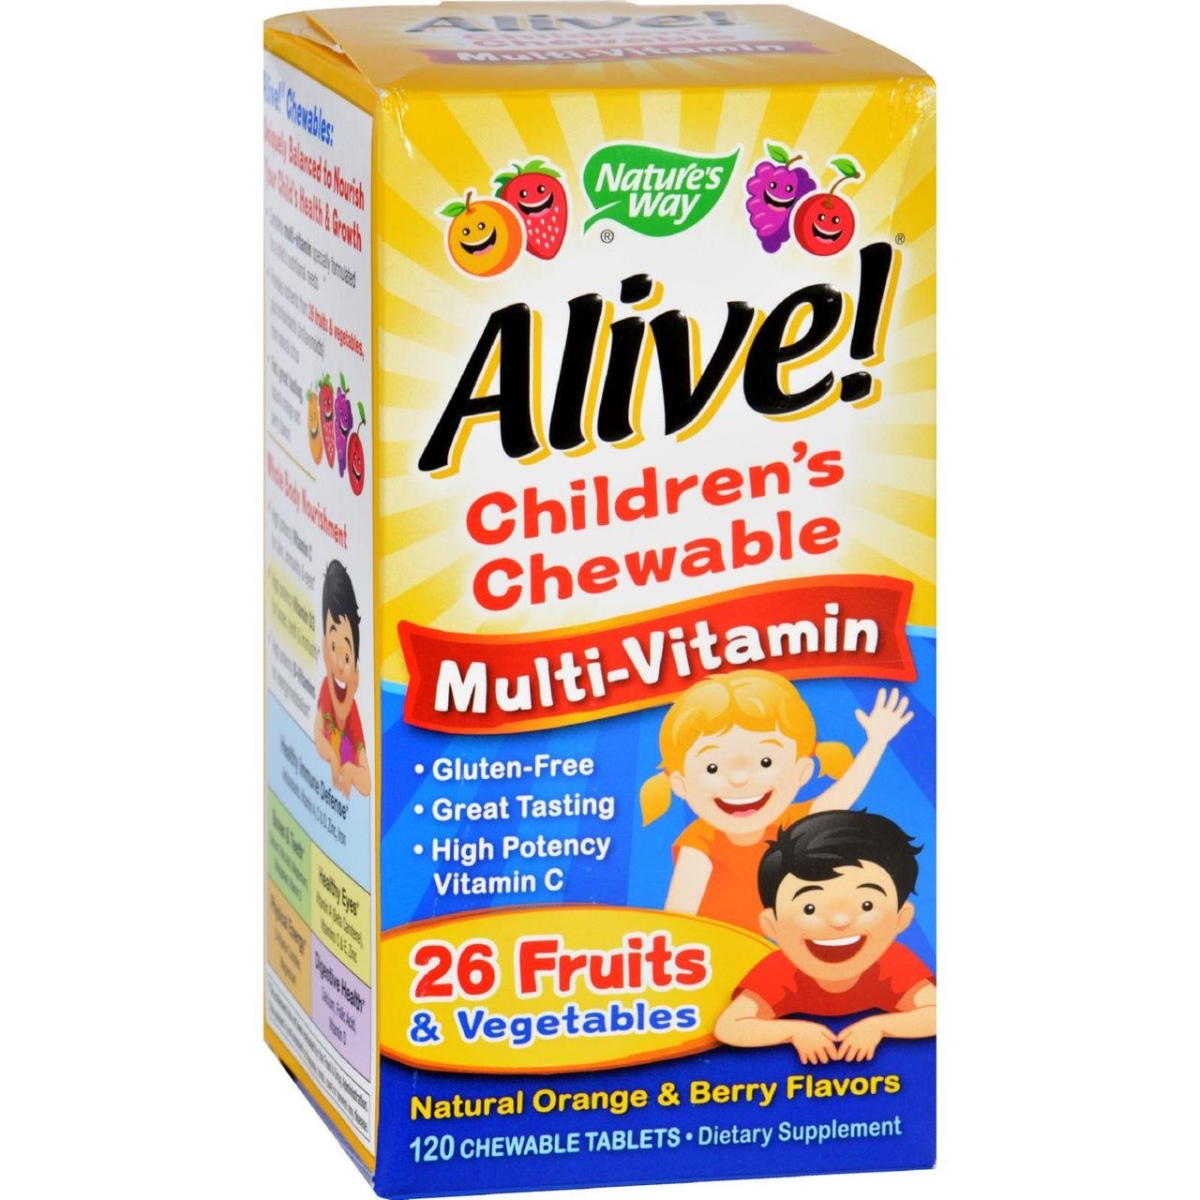 Hg1131317 Alive Childrens Multi-vitamin Chewable Natural, Orange & Berry - 120 Chewable Tablets